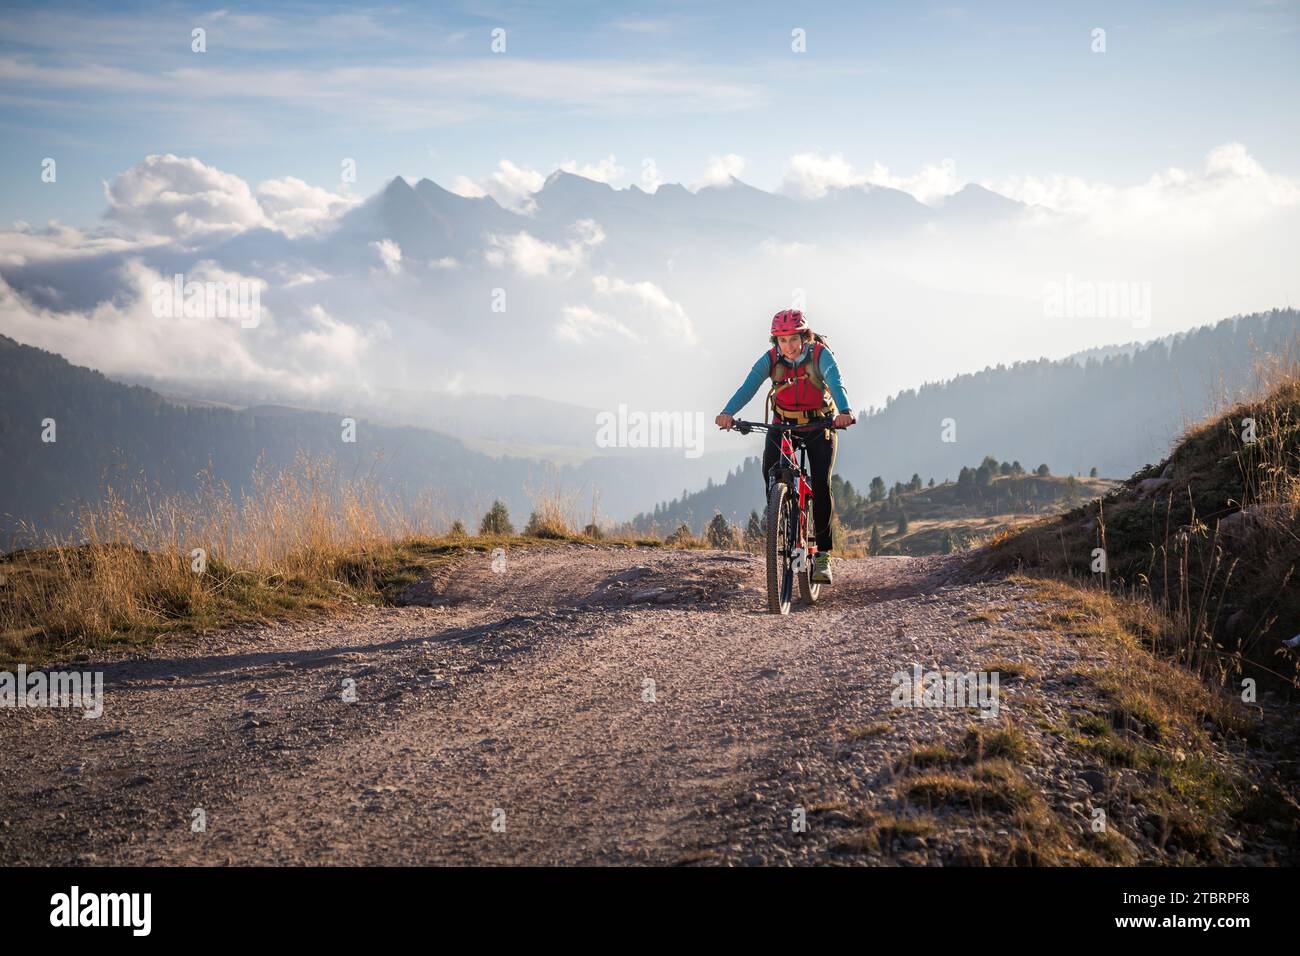 Italy, Veneto, province of Belluno, outdoor activity, woman along a dirt road riding an e-bike Stock Photo